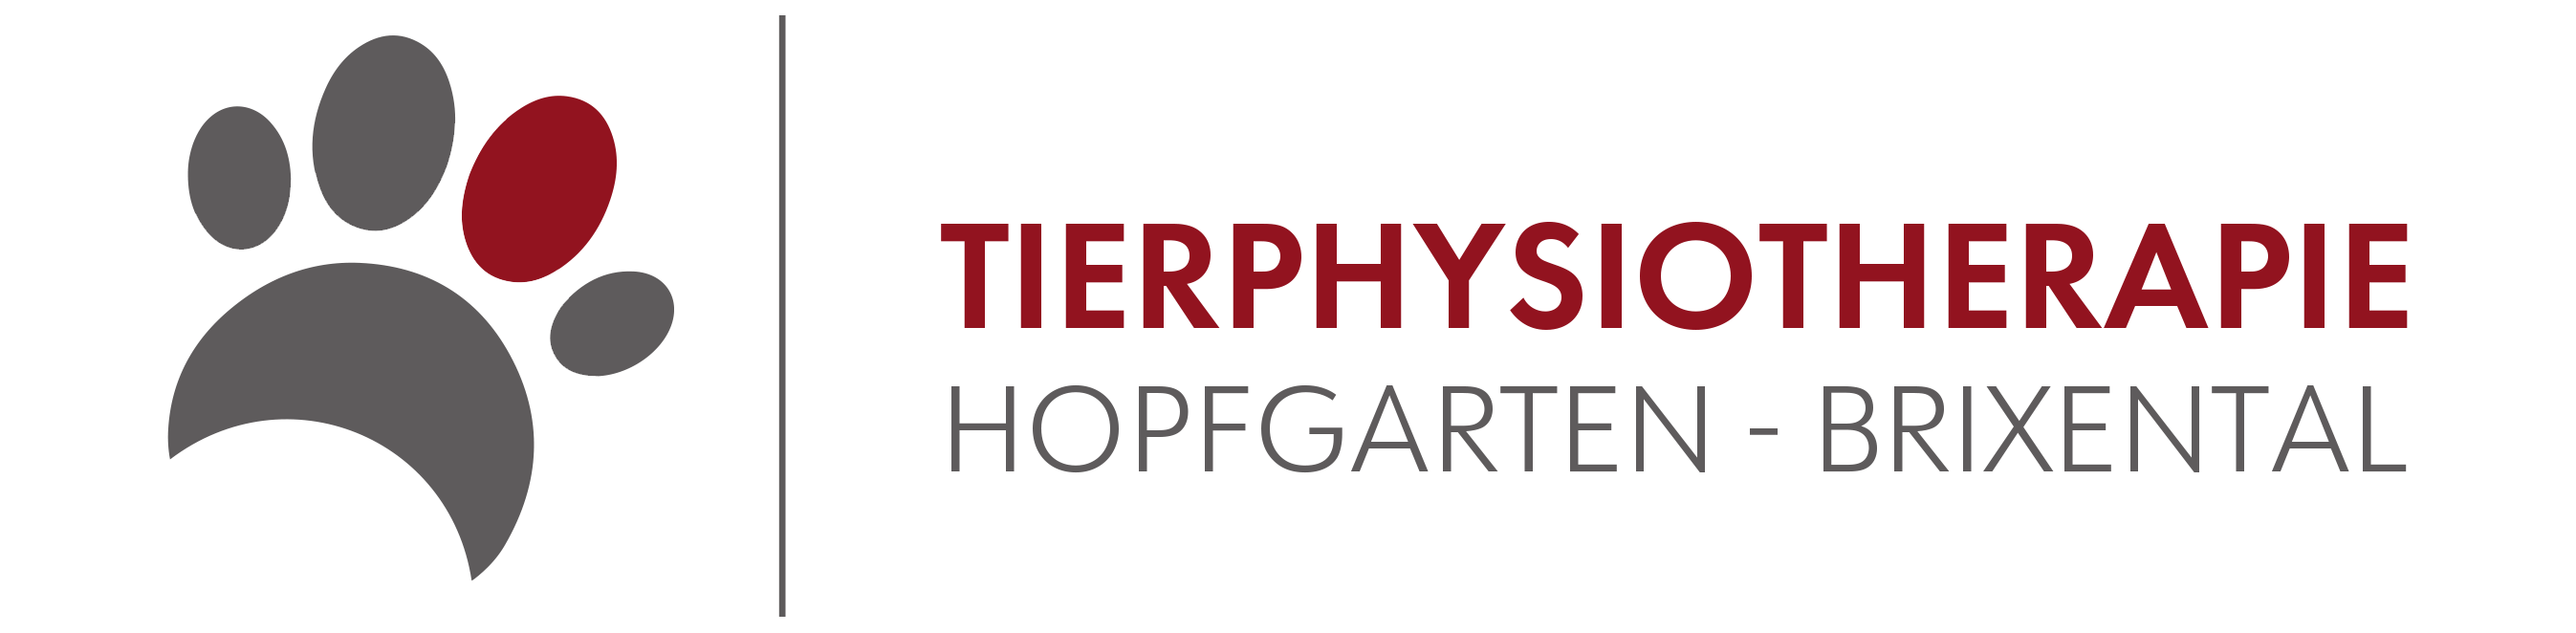 Tierphysiotherapie Hopfgarten